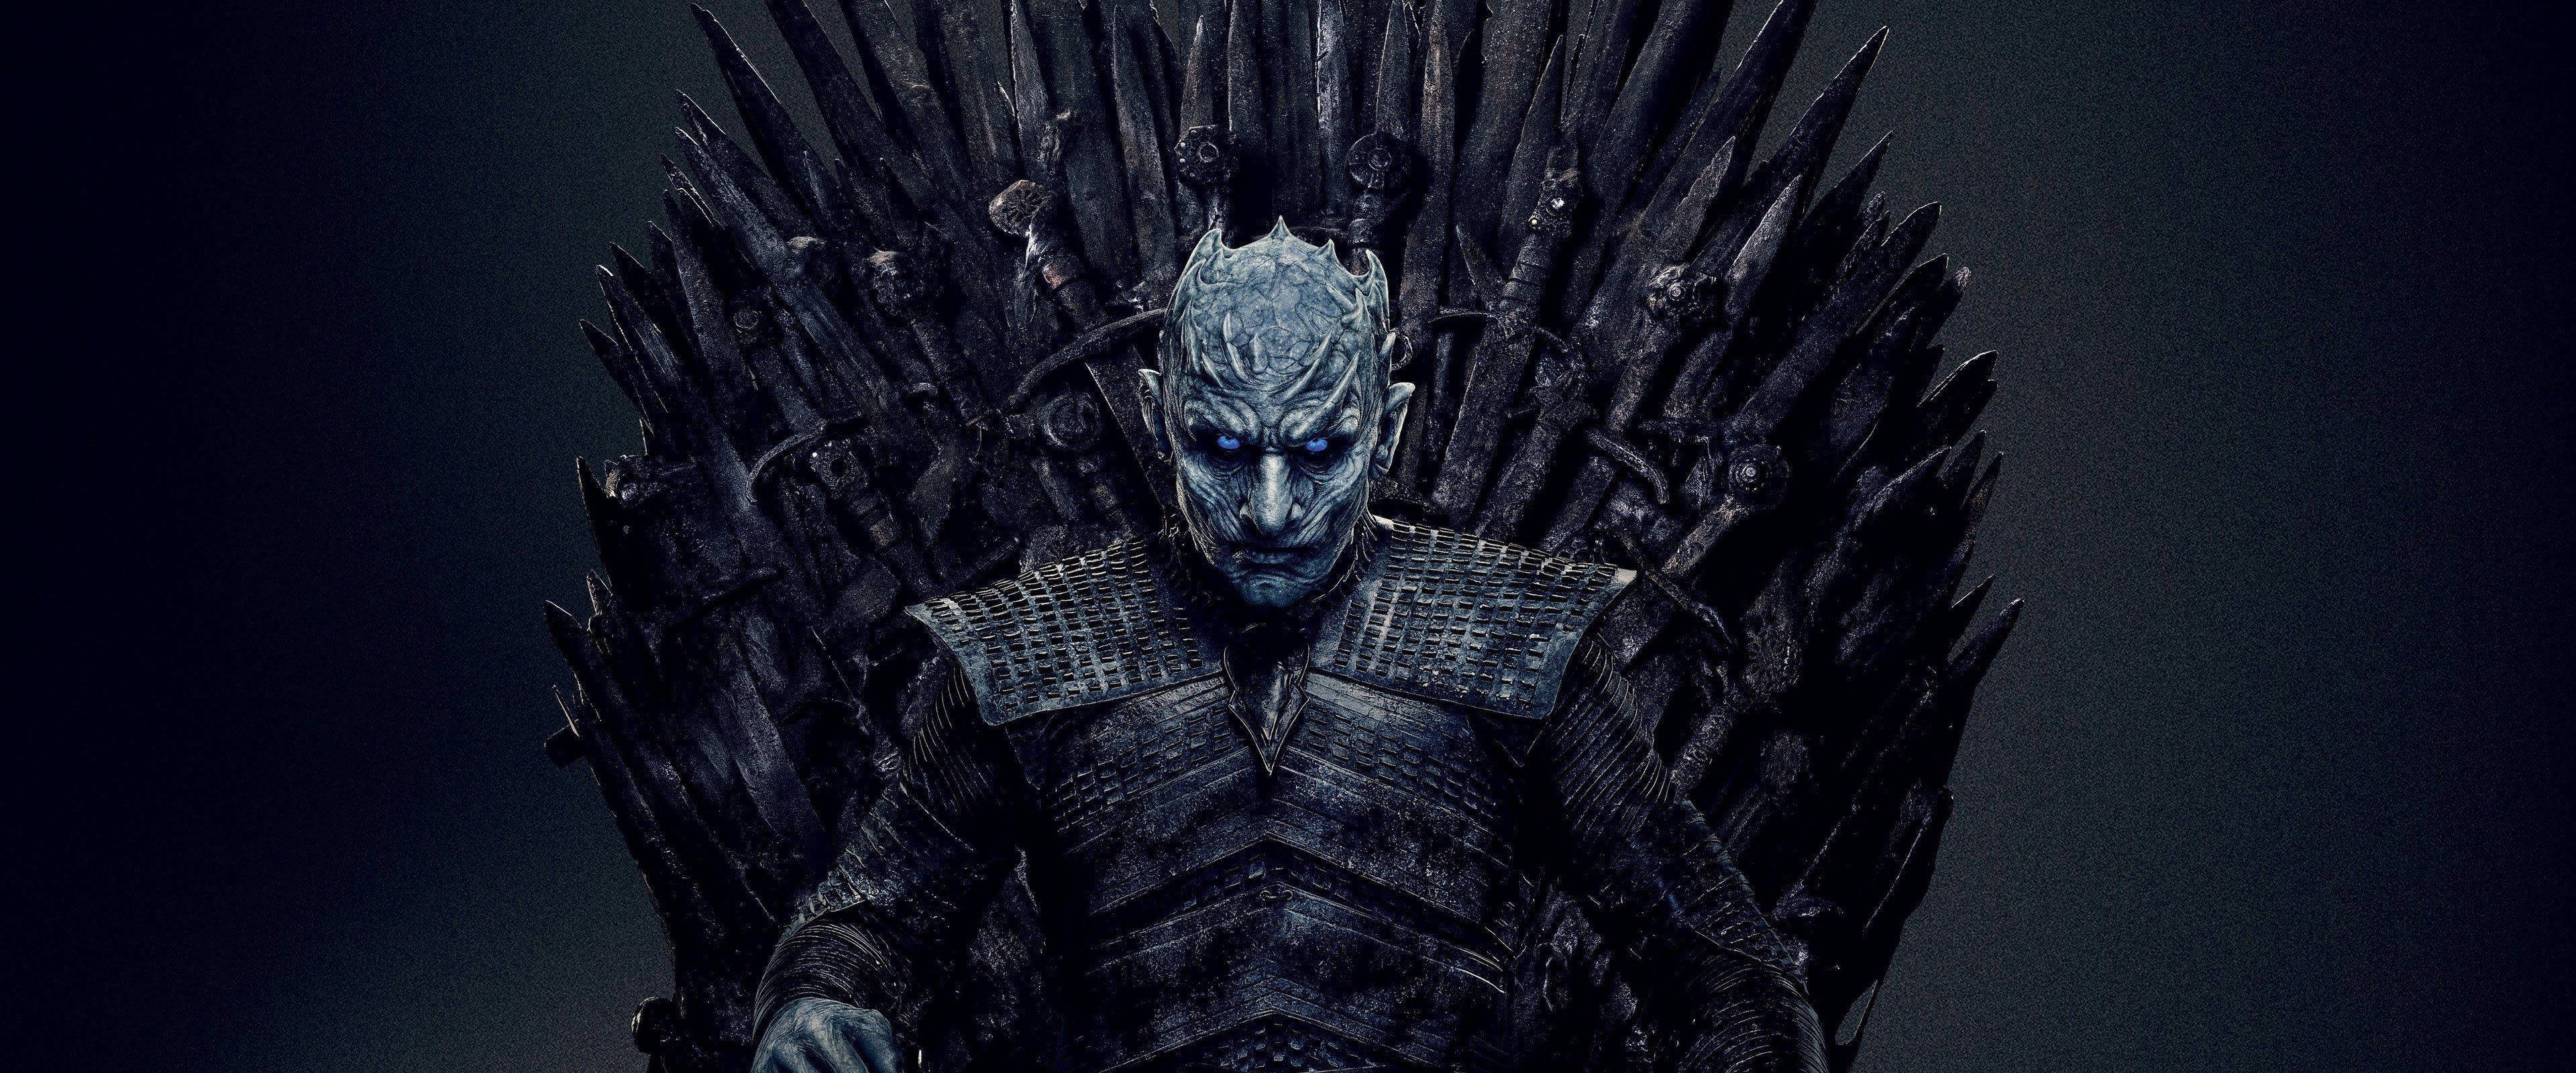 Game Of Thrones Season 8 Night Throne Background